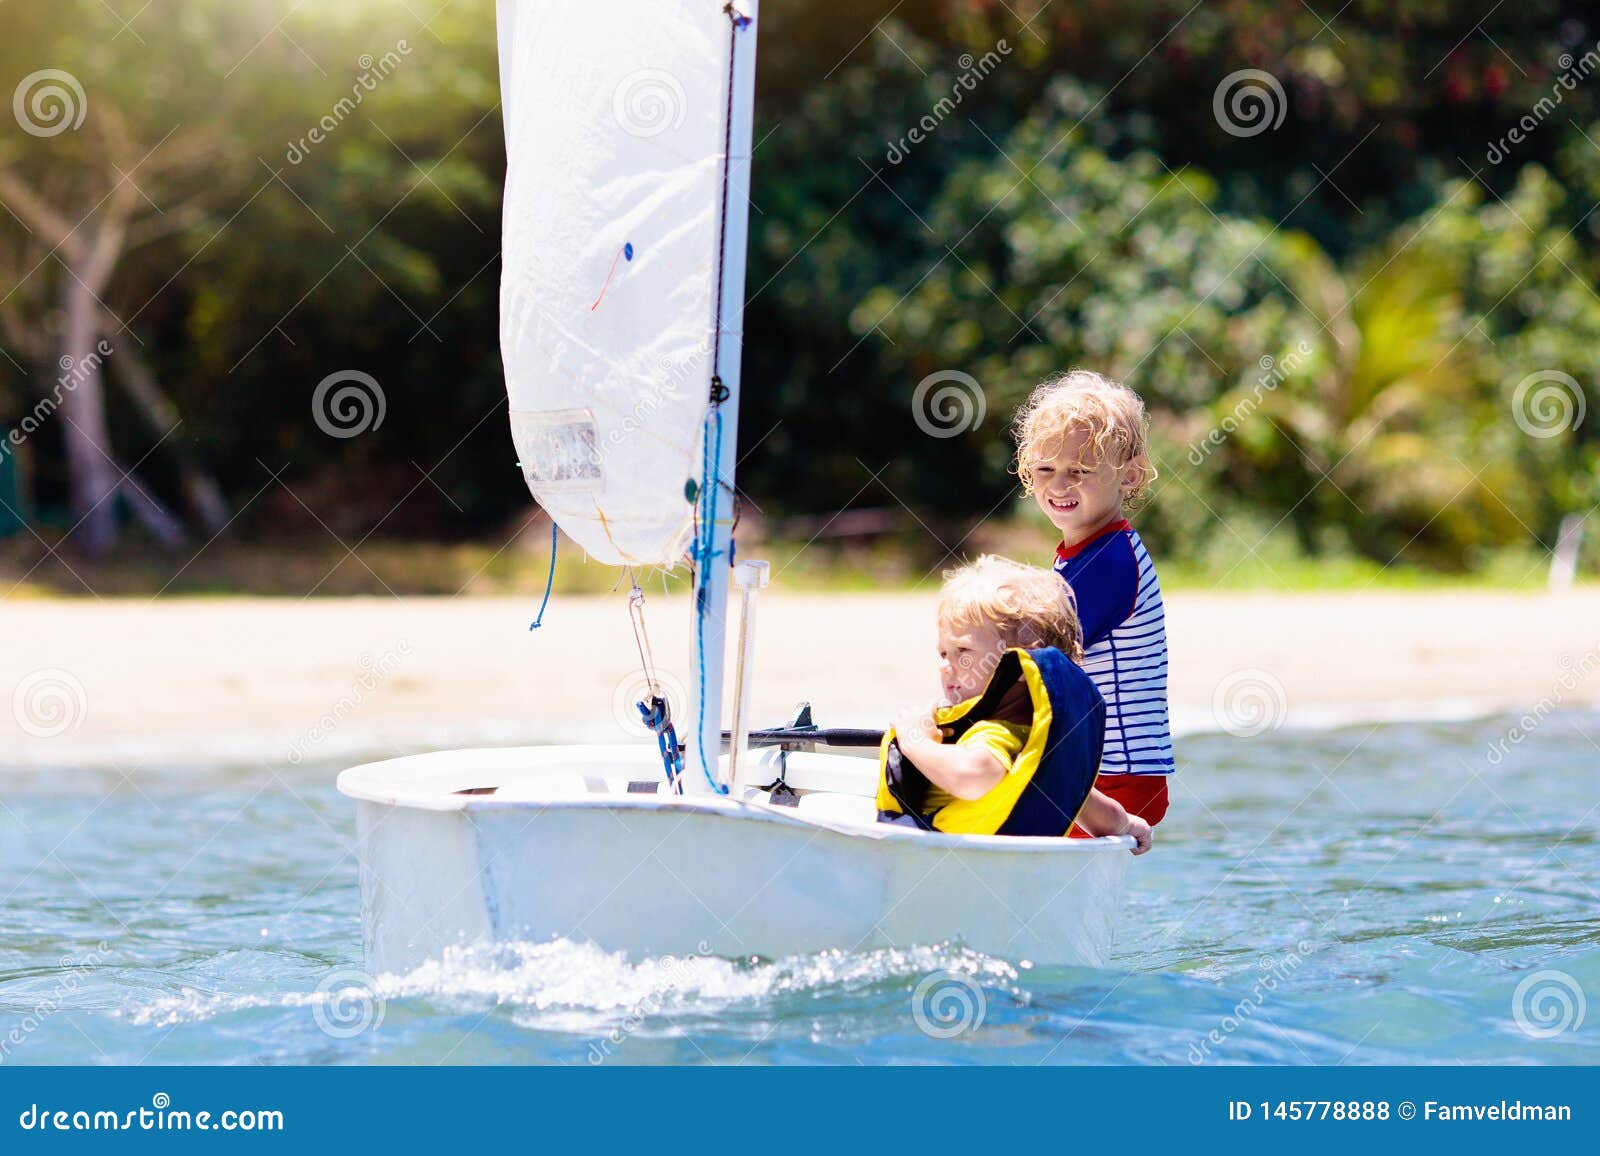 one yacht kid